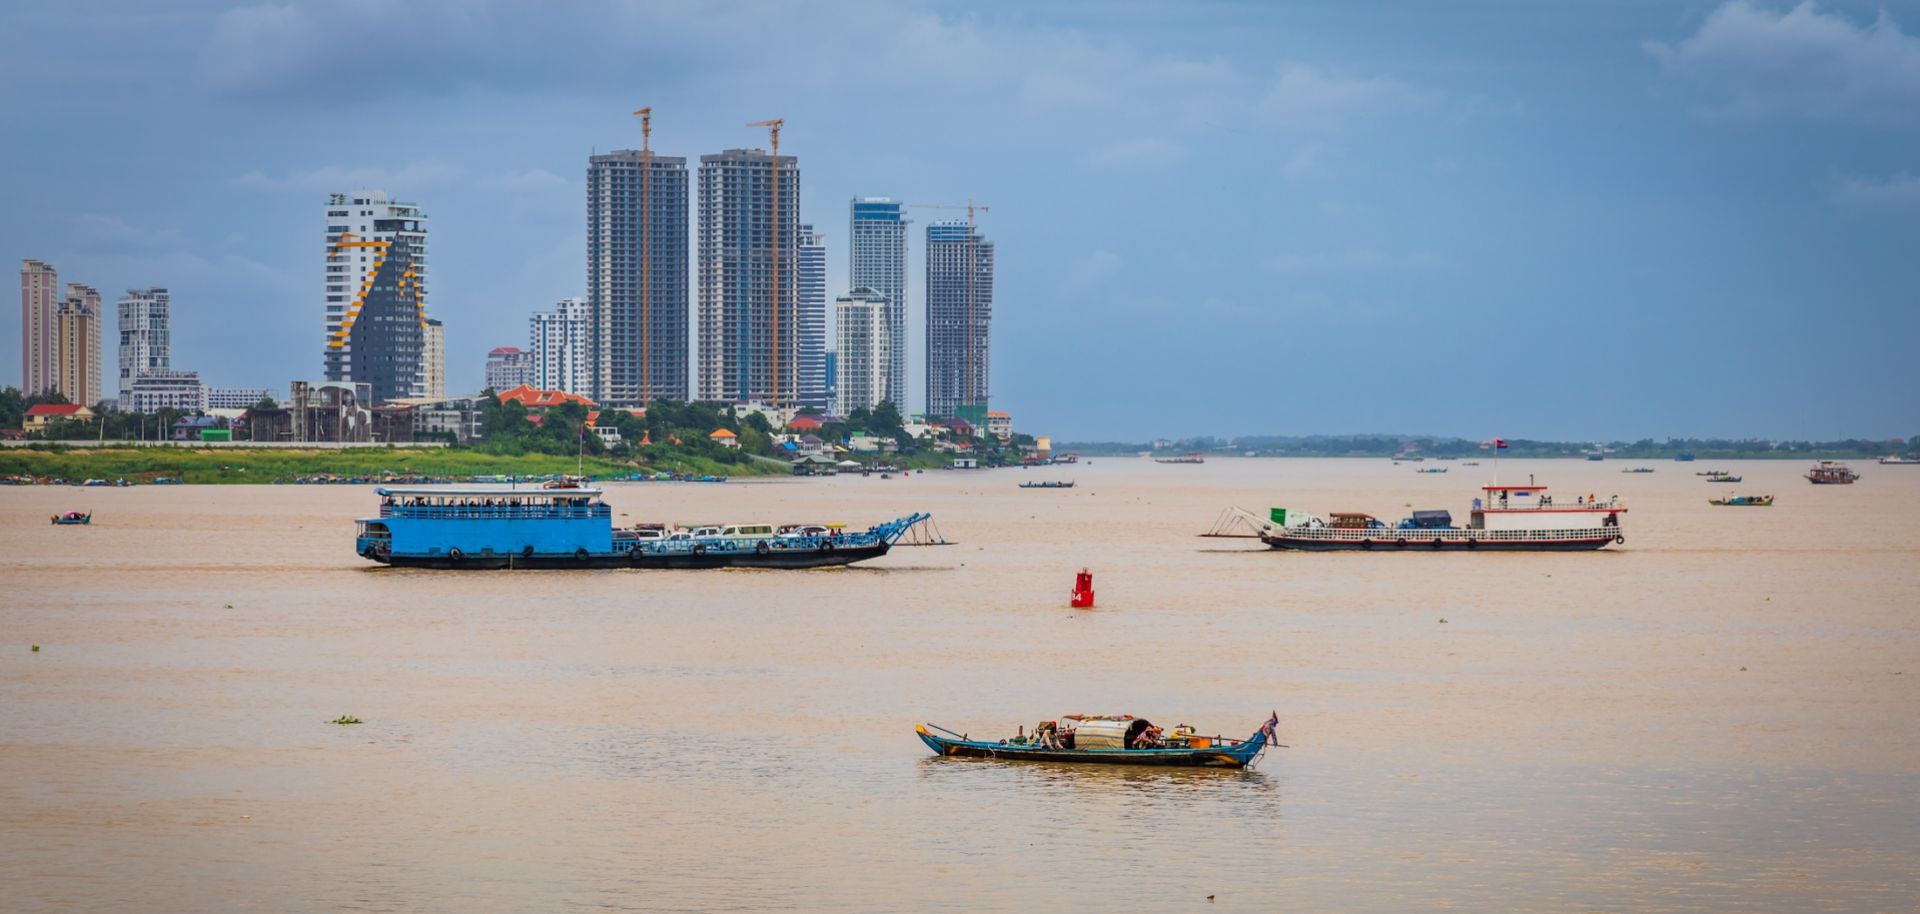 The Mekong River and Tonle Sap River meet at Phnom Penh, Cambodia.